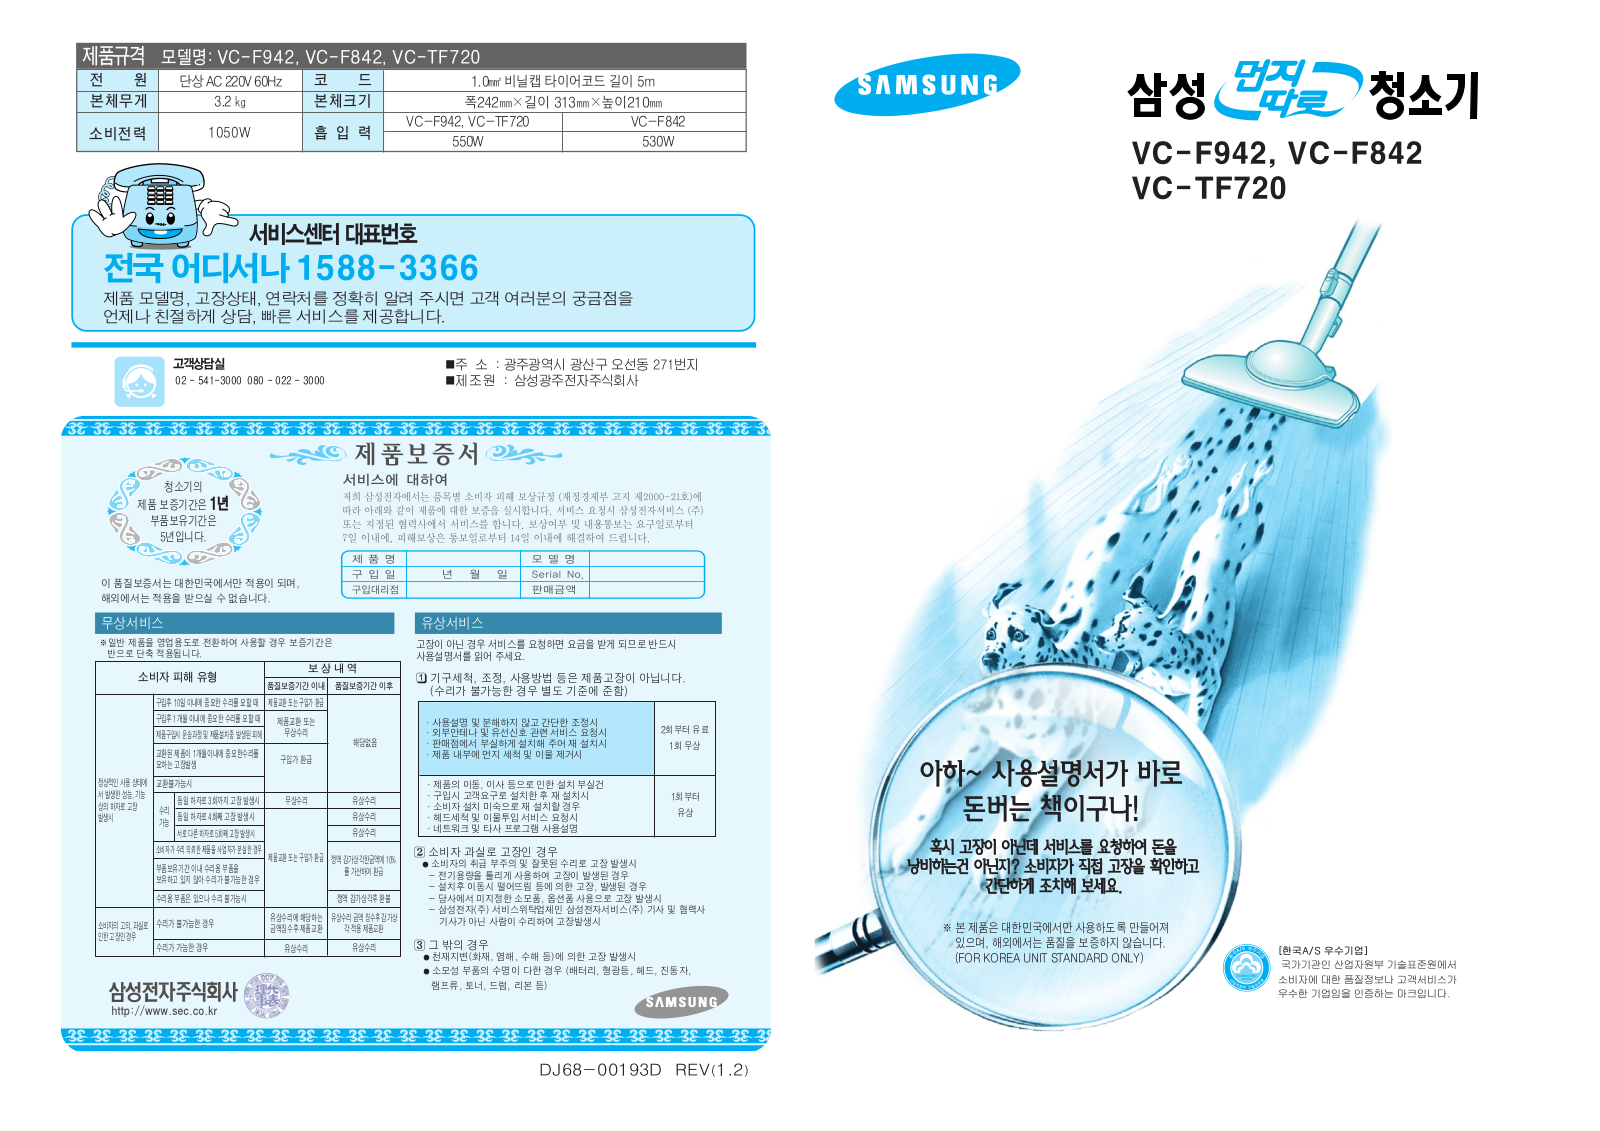 Samsung VC-F842, VC-F942, VC-TF720 Manual